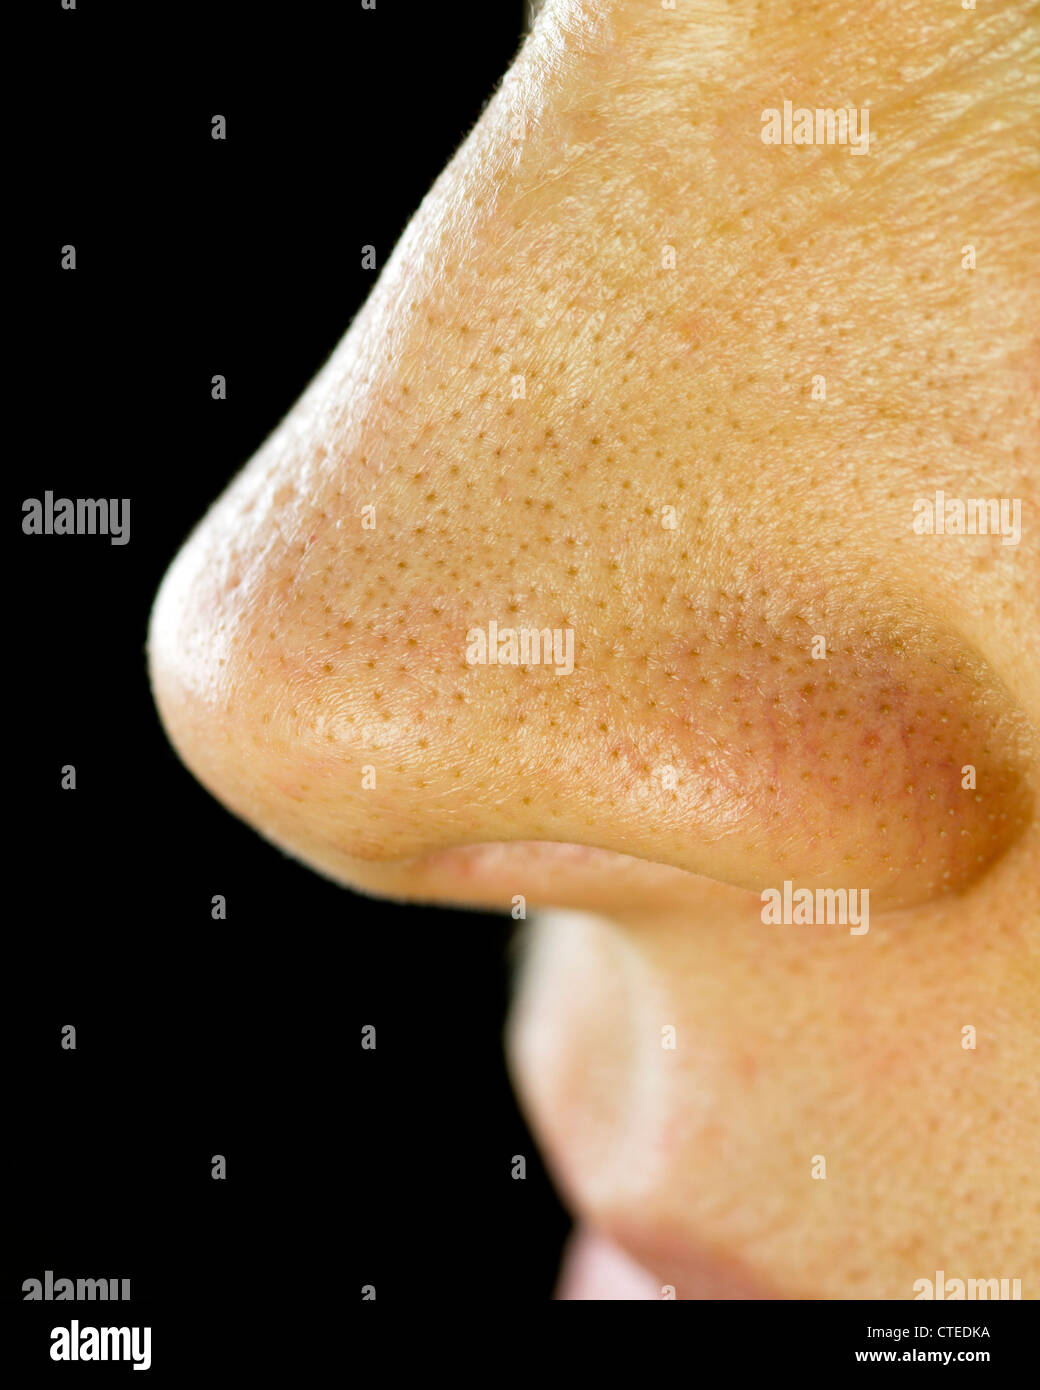 Punti neri sul naso. Macro Foto stock - Alamy